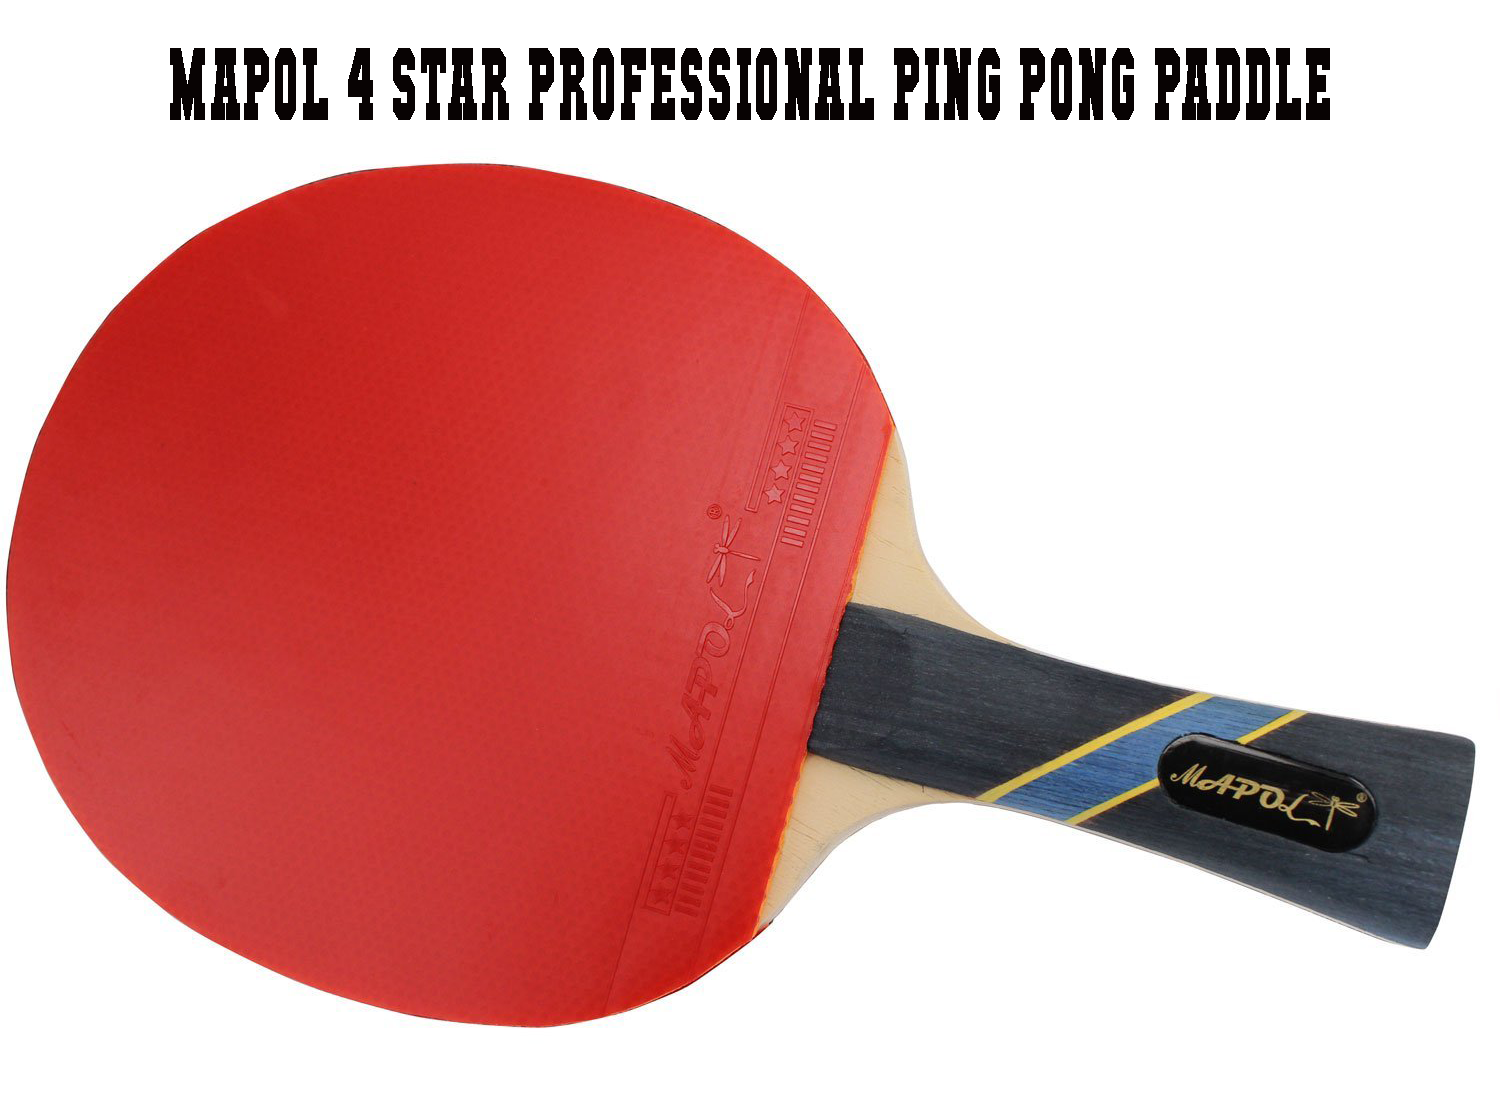 kevenz ping pong balls review